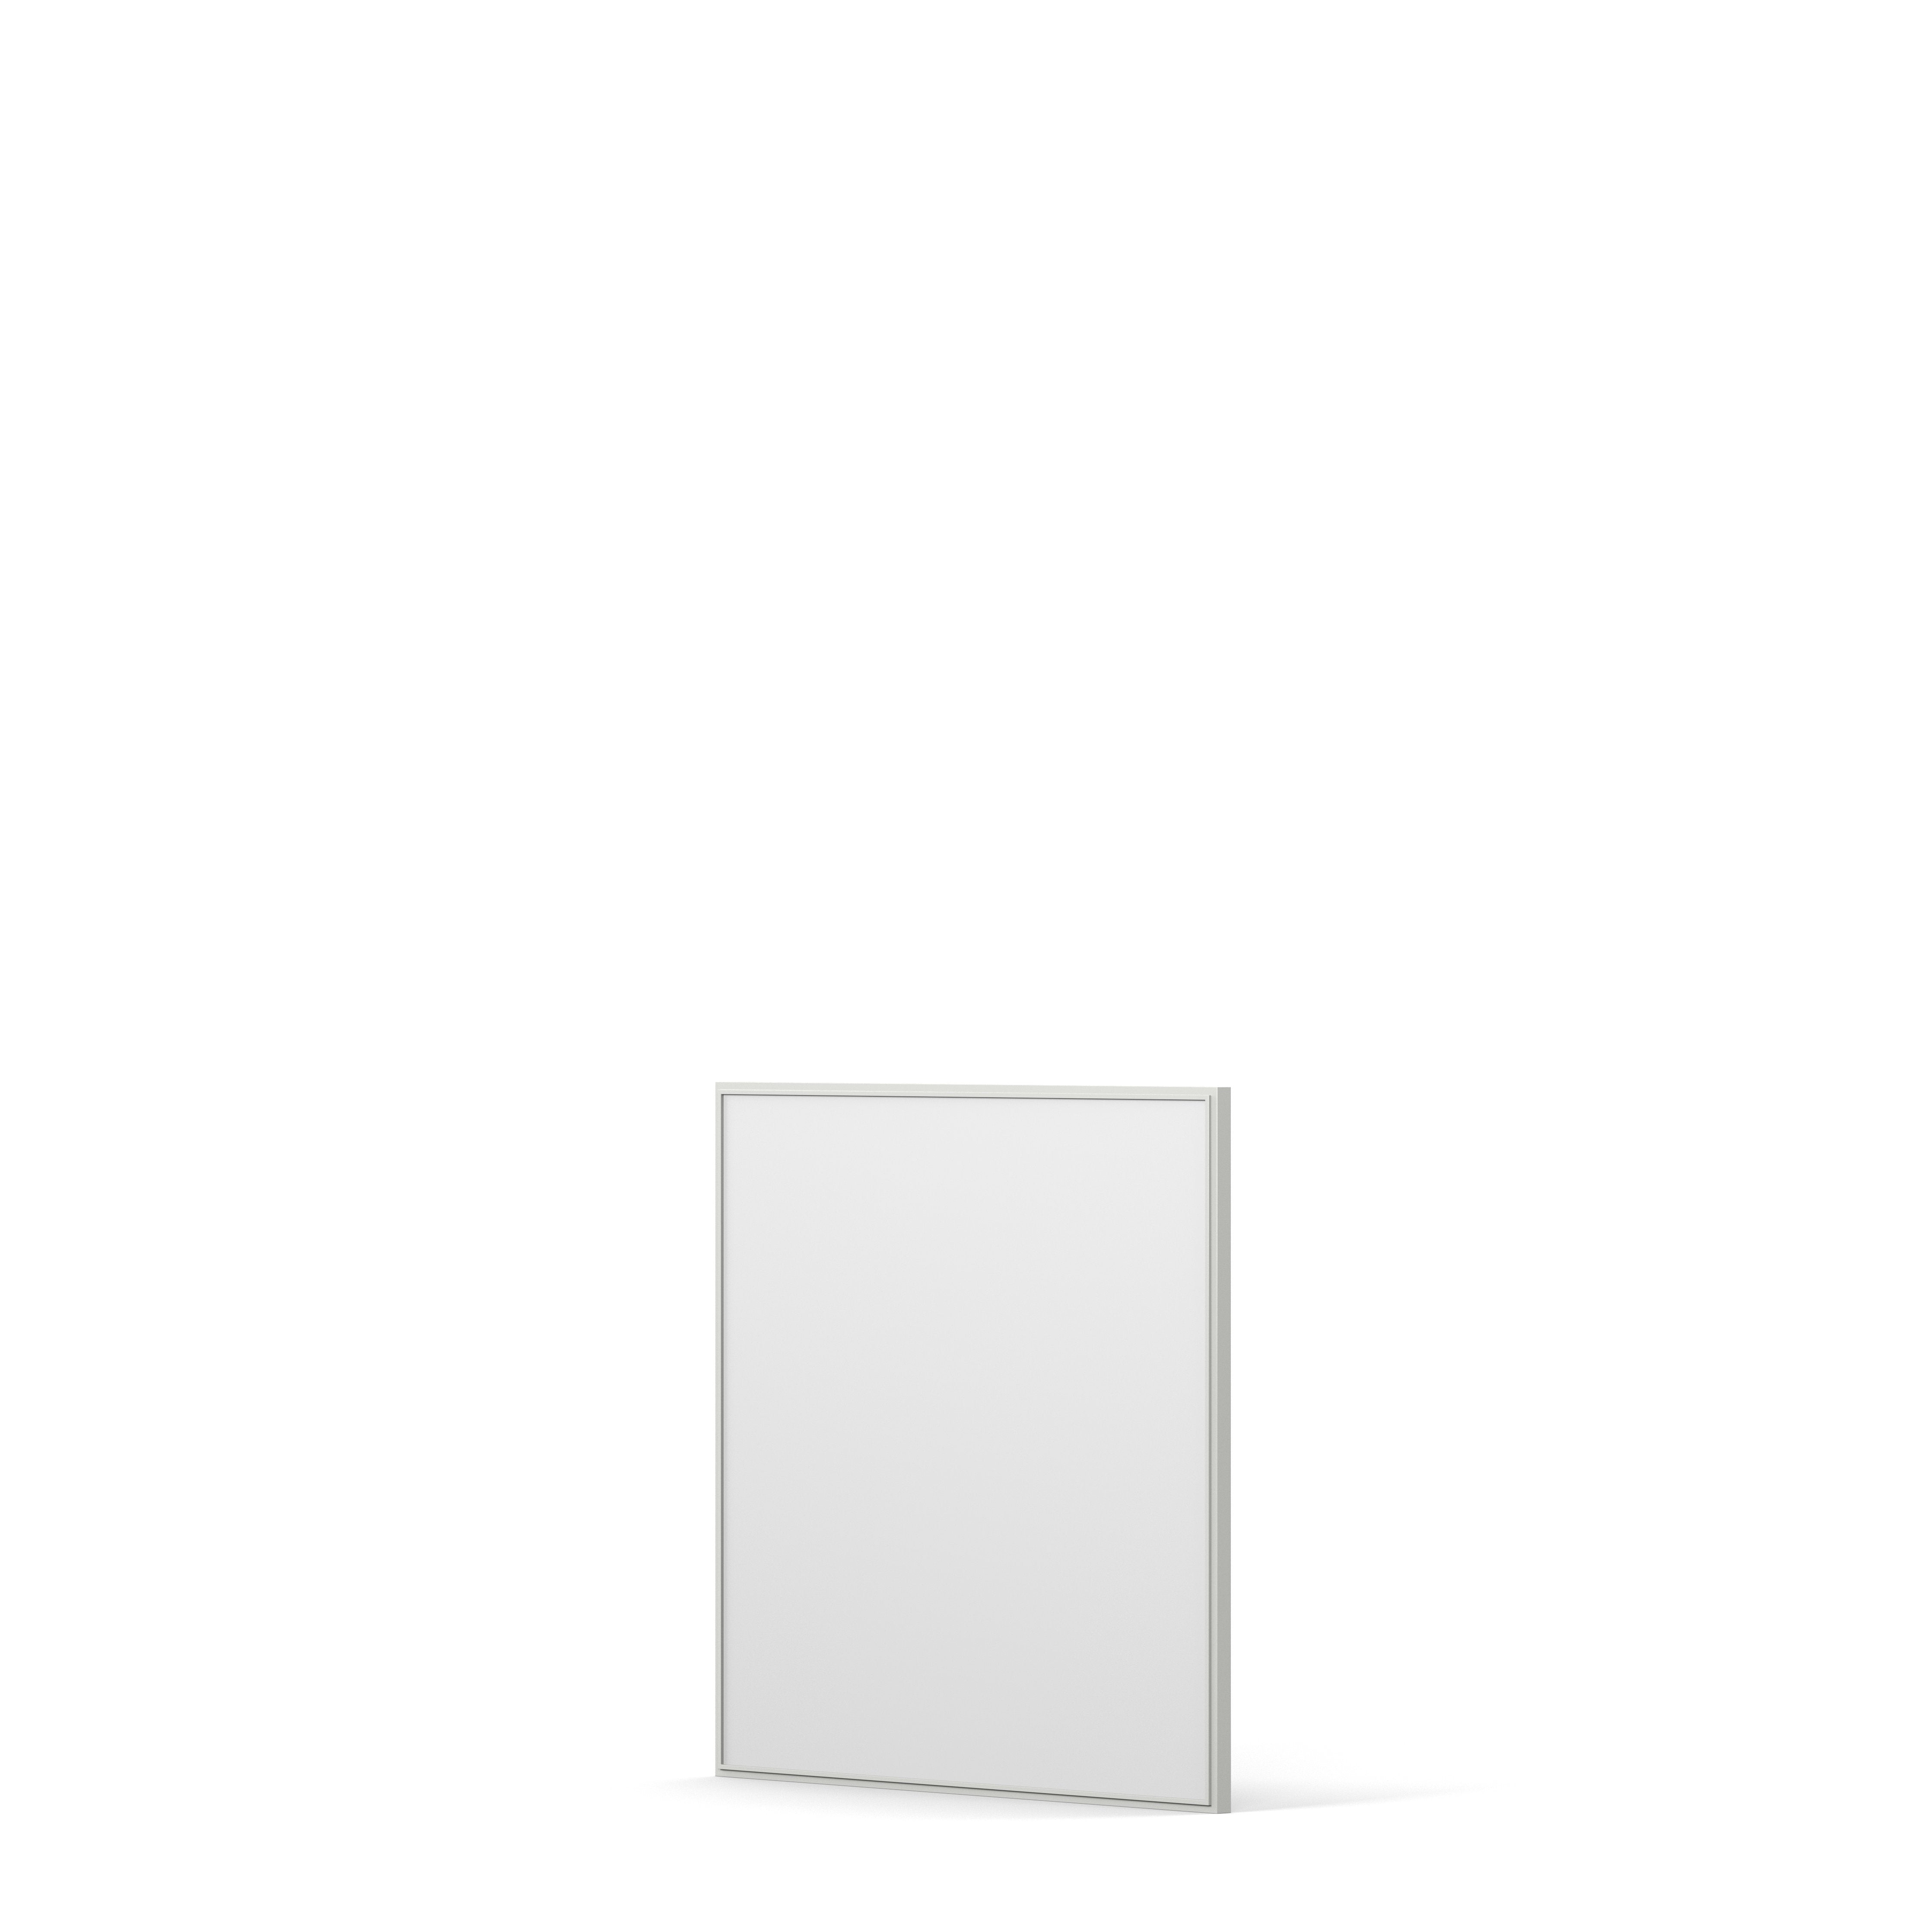 Englesson Speglar Cube Spegel Kvadratisk #färg_Edge White